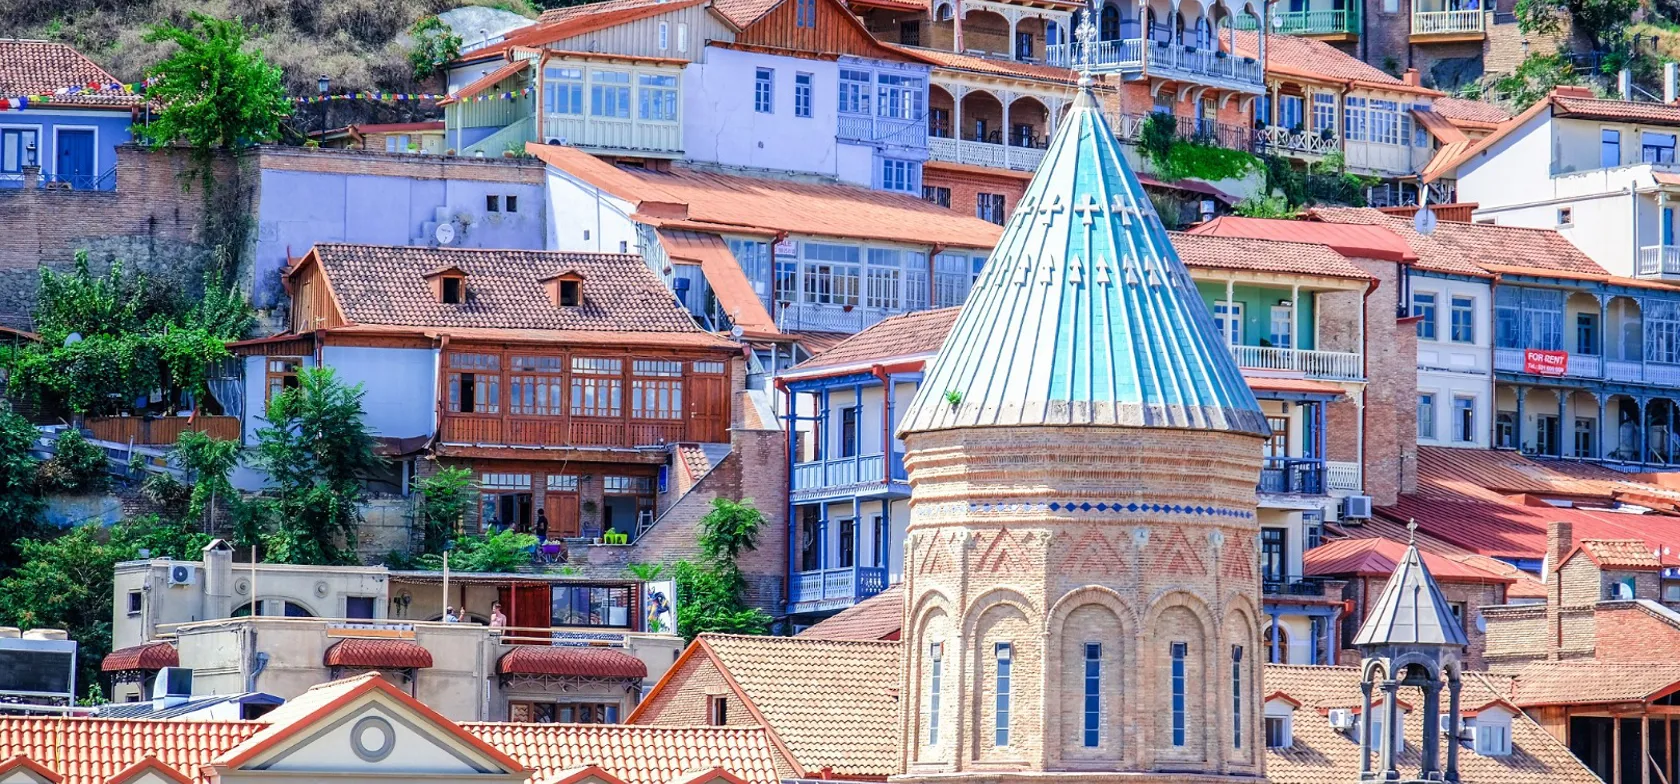 Tbilisis gamle bydel er charmerende. Foto Tania Rodrigues